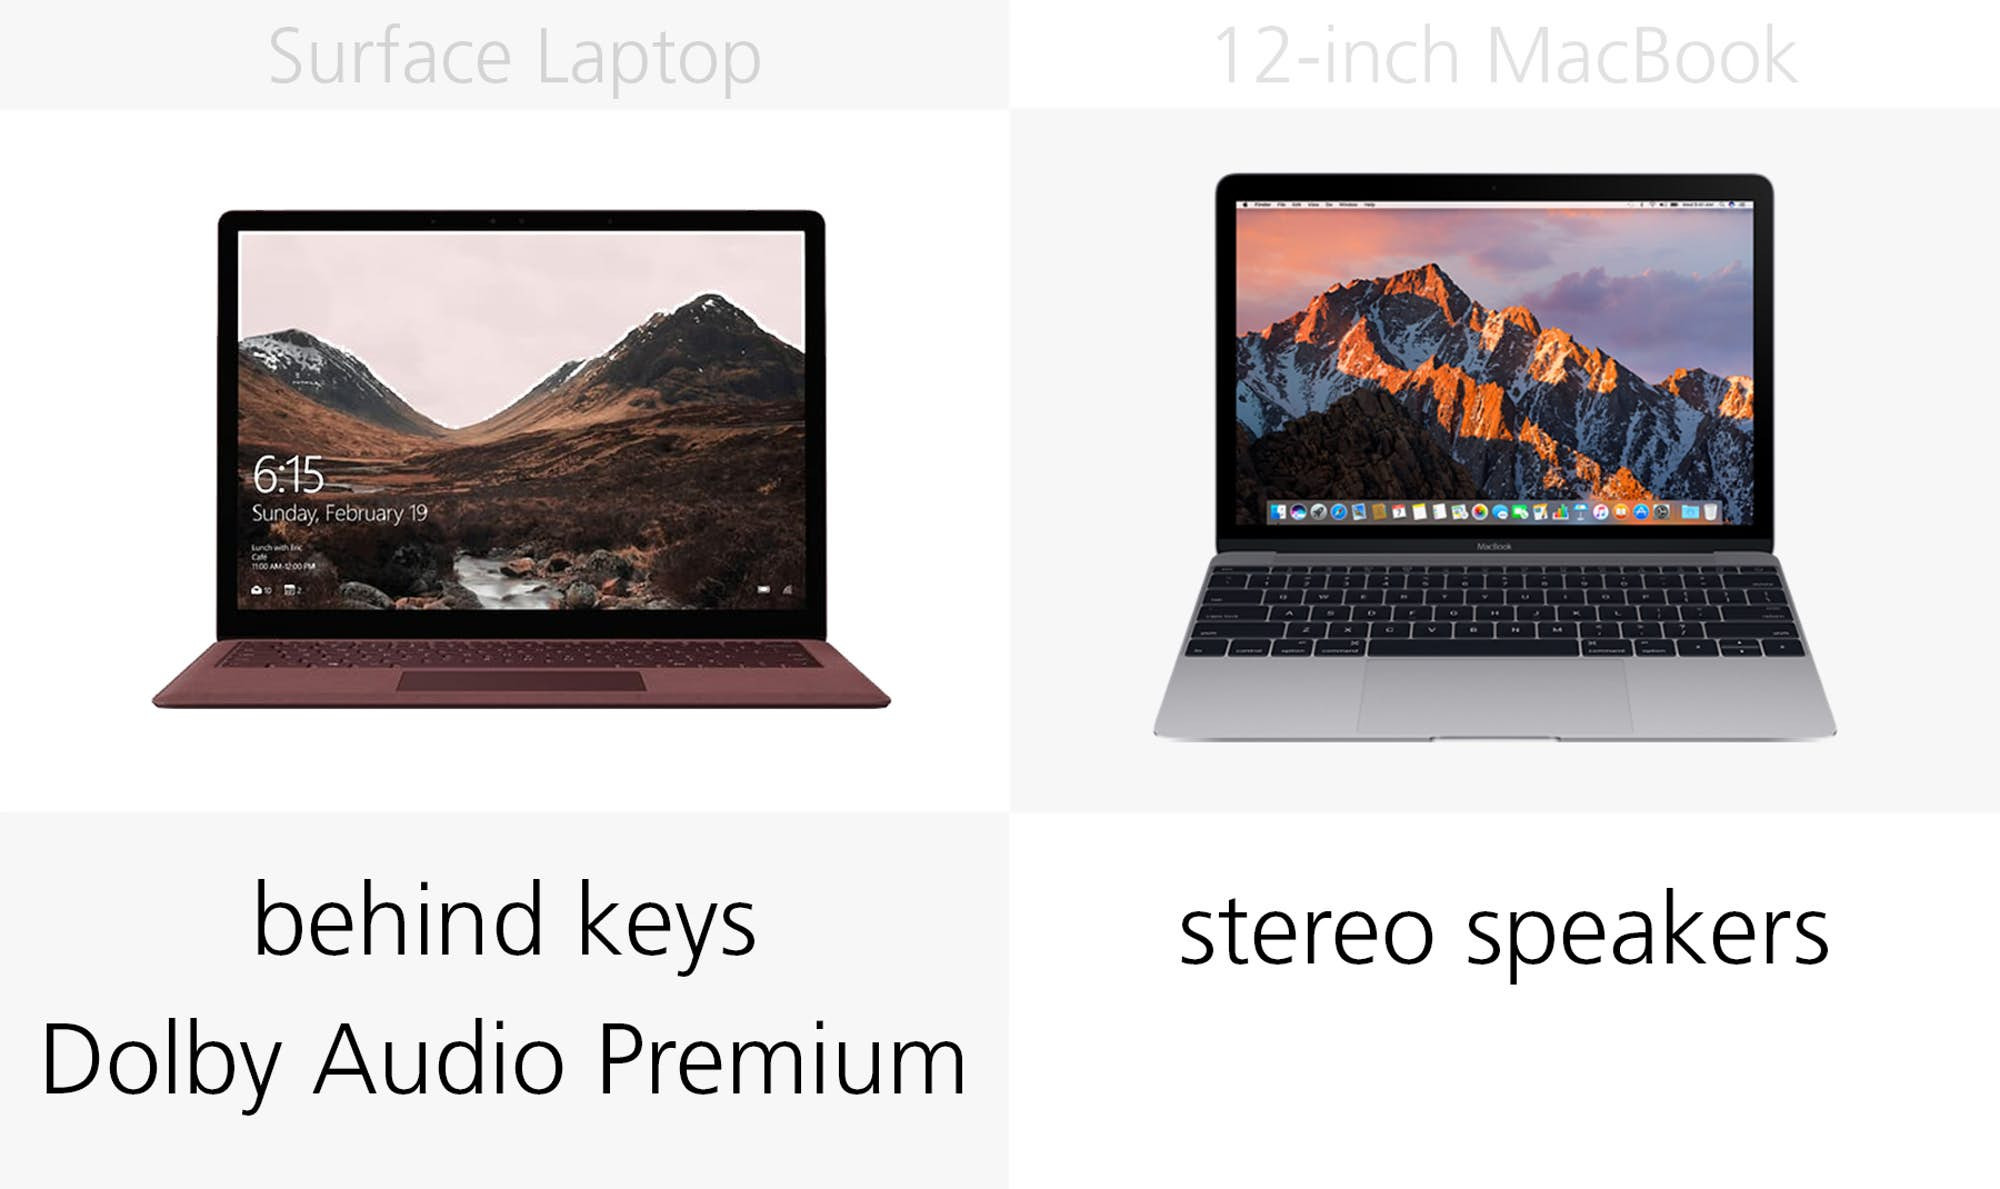 1493888157_apple-macbook-vs-microsoft-surface-laptop-8.jpg